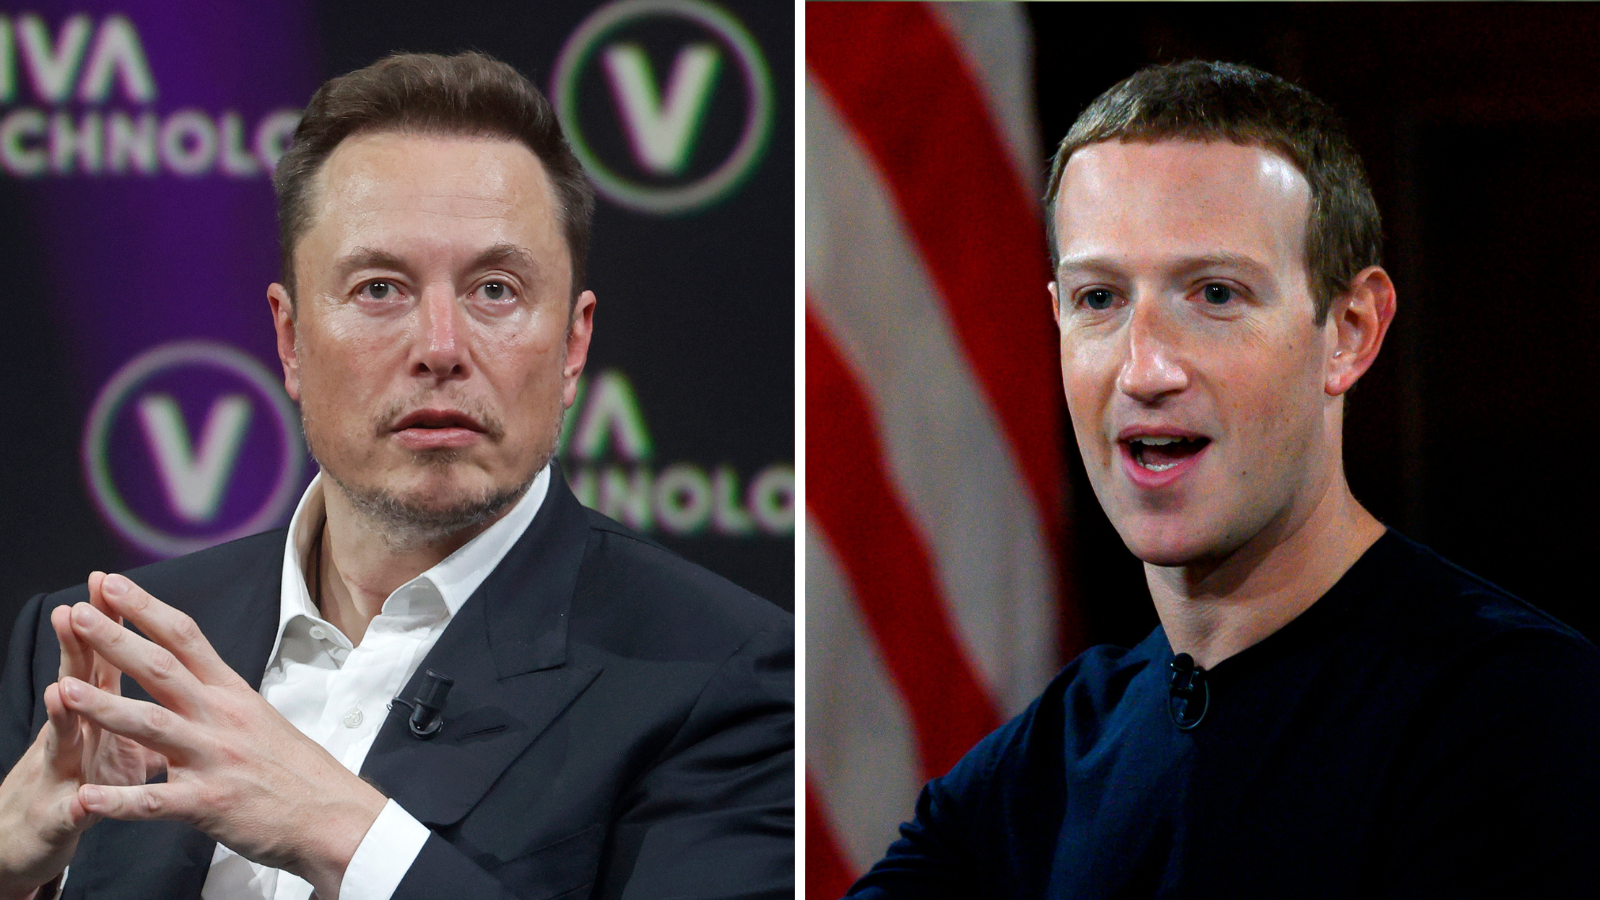 Zuckerberg Accepts Elon Musk’s Cage Match Challenge: ‘Send Me Location’